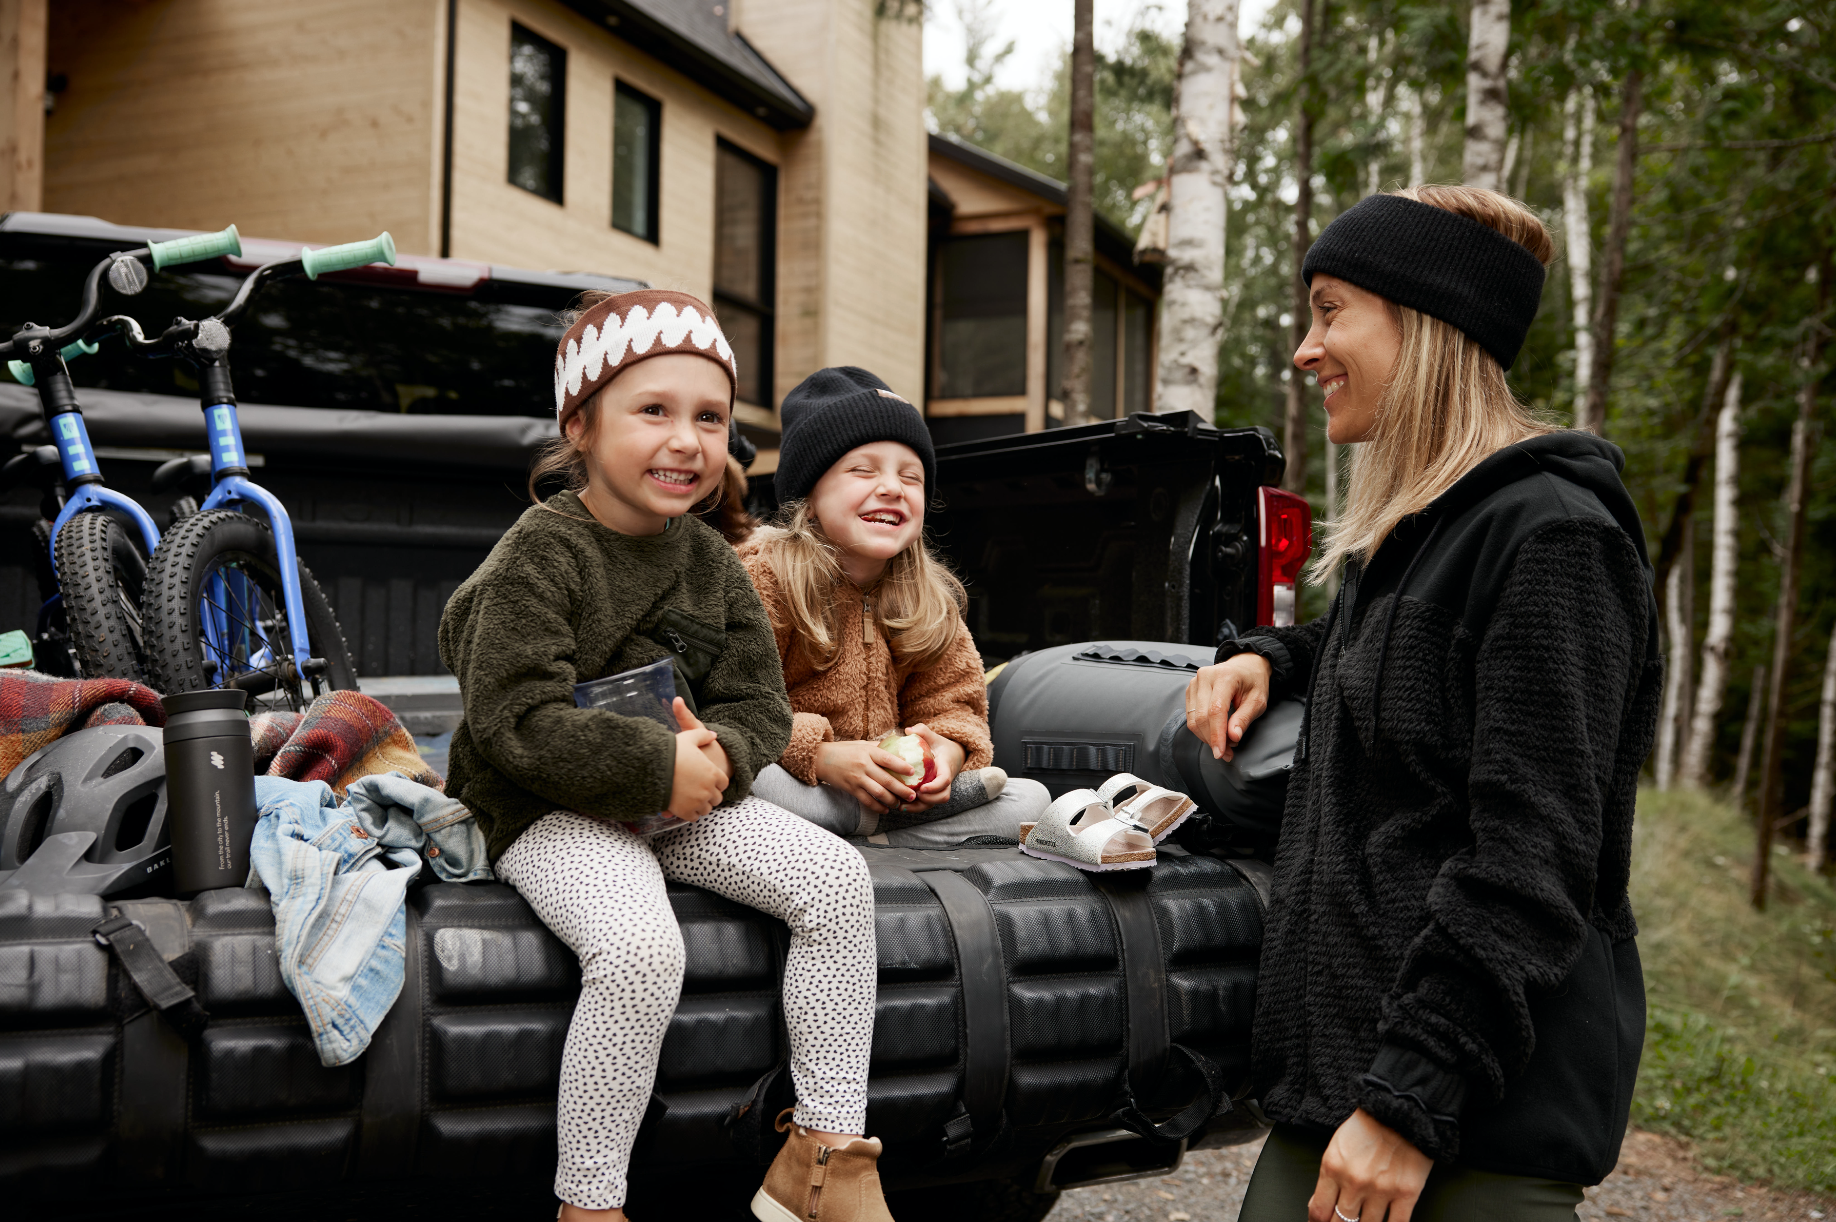 Simplify The Family Outdoor Experience||Simplifier le plein air en famille